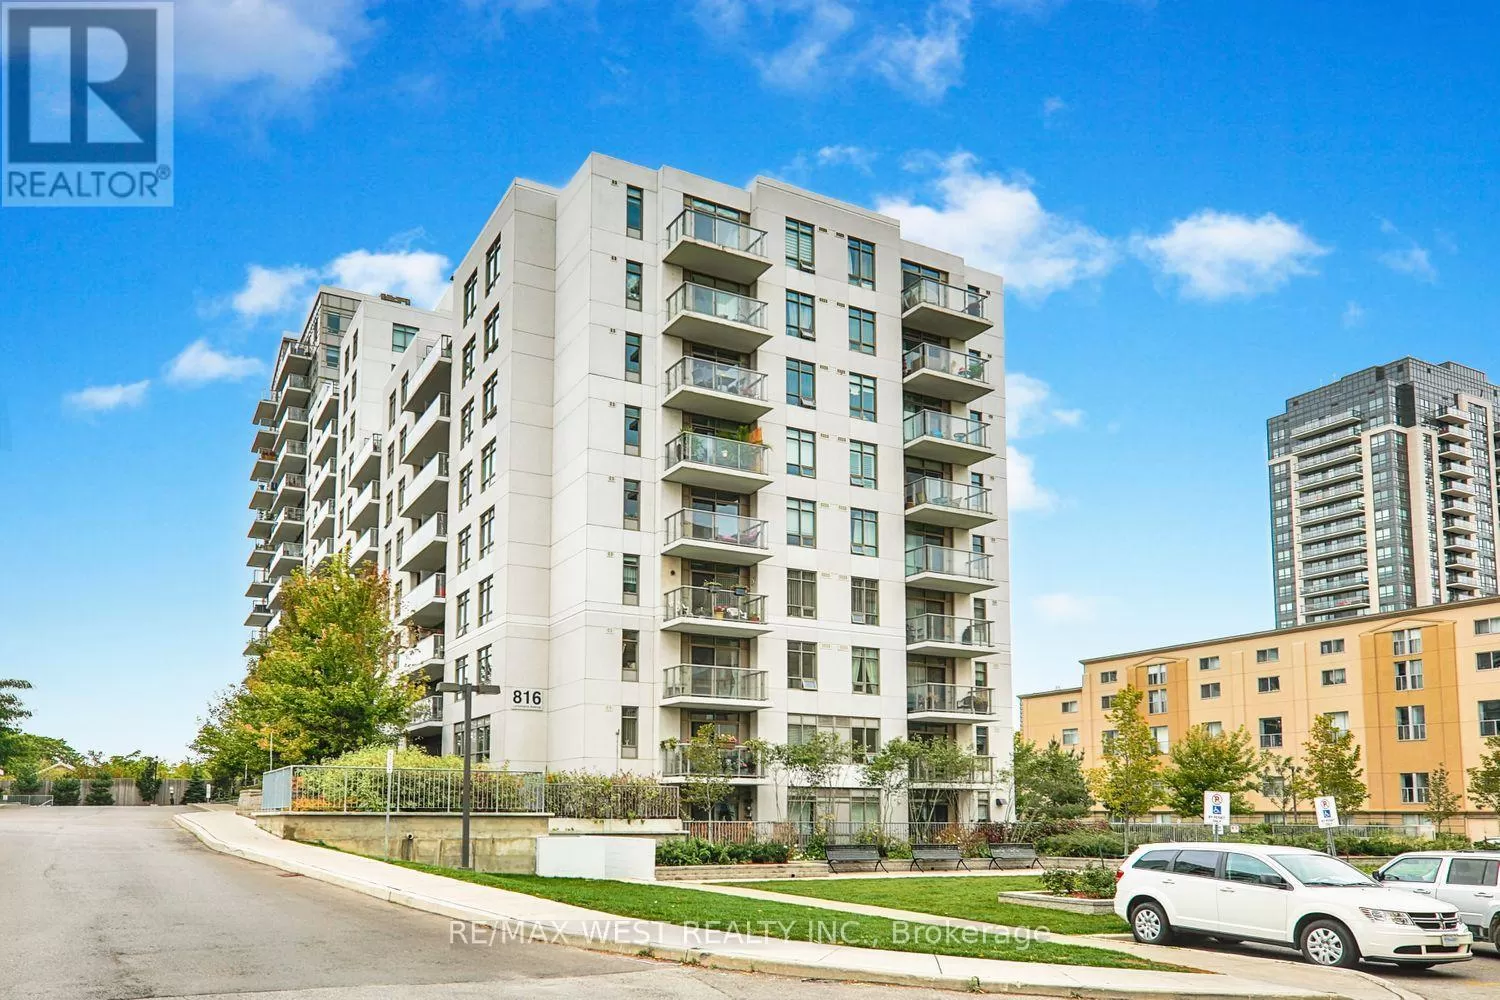 Apartment for rent: Ll04 - 816 Lansdowne Avenue, Toronto, Ontario M6H 4K6